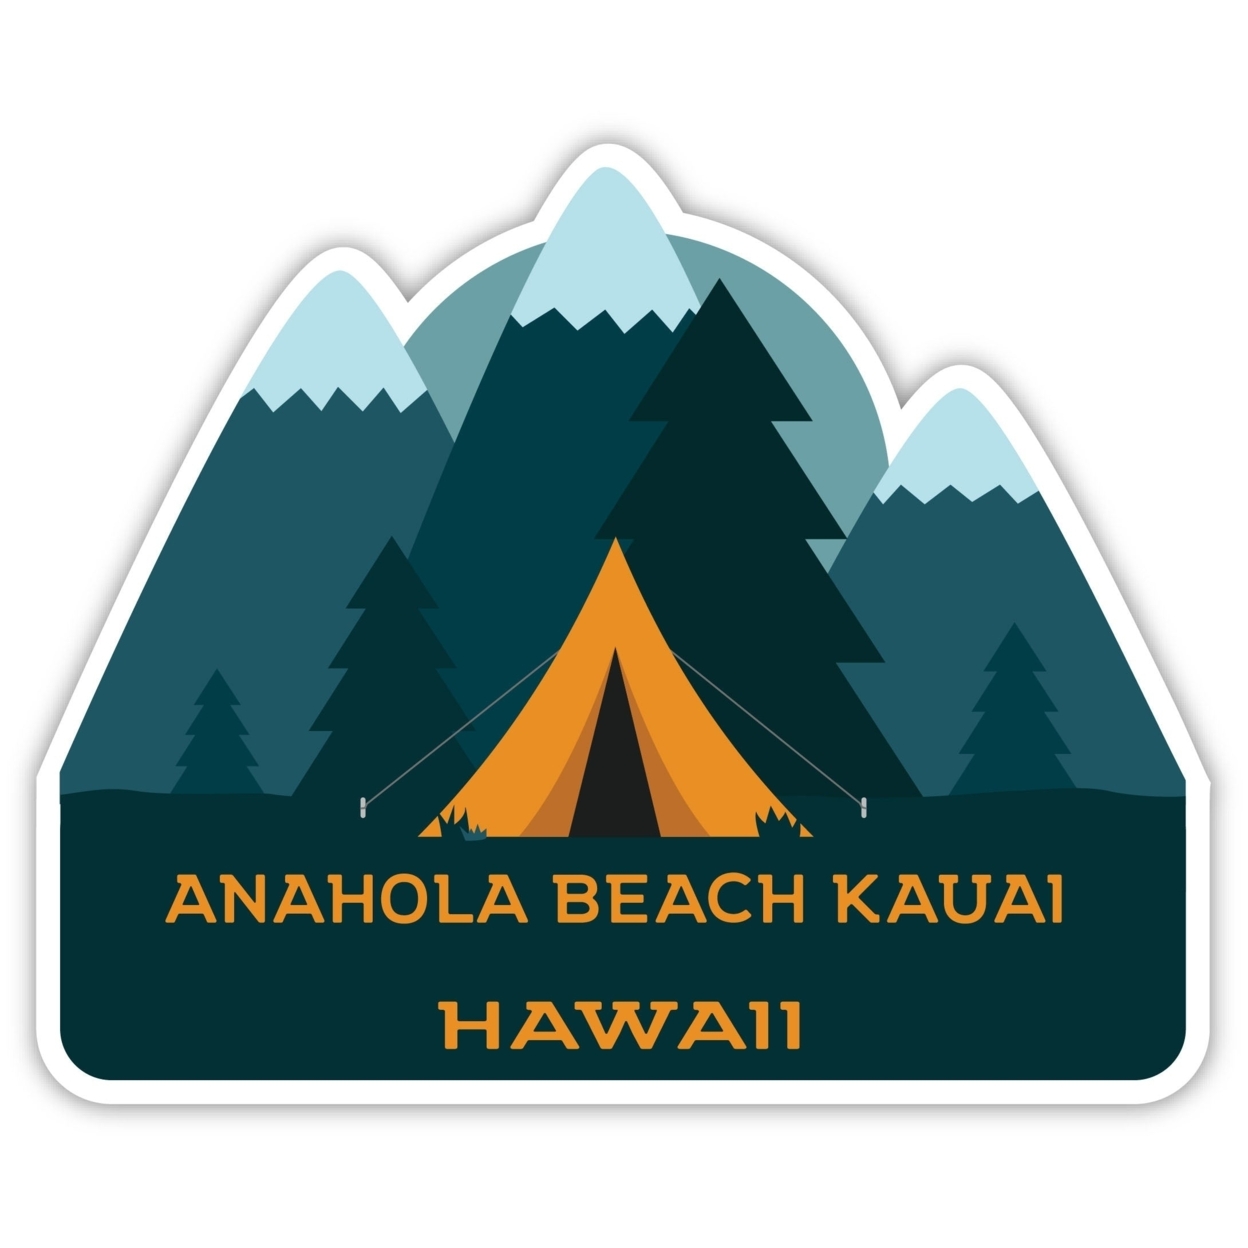 Anahola Beach Kauai Hawaii Souvenir Decorative Stickers (Choose Theme And Size) - Single Unit, 4-Inch, Tent